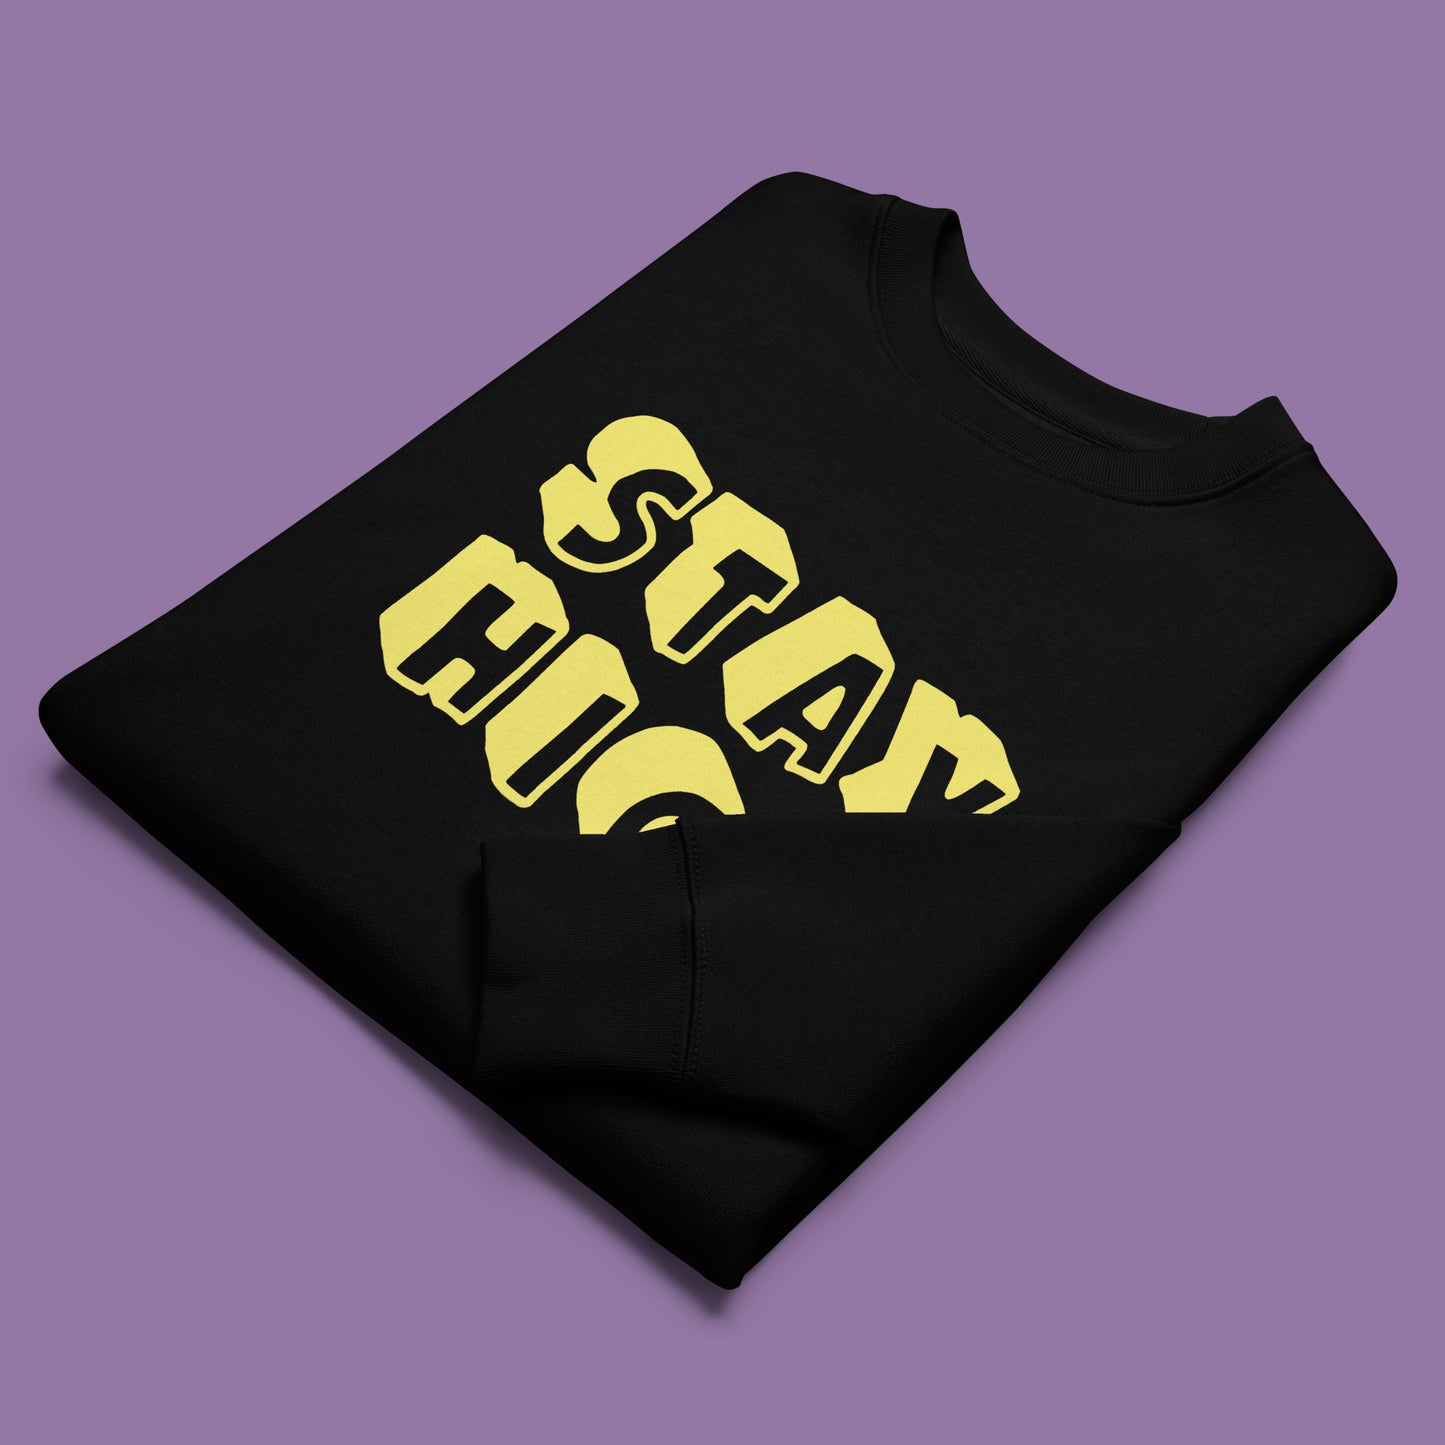 Festival, Rave & Club Sweatshirt // STAY HIGH // Unisex Eco Sweatshirt // Custom Made